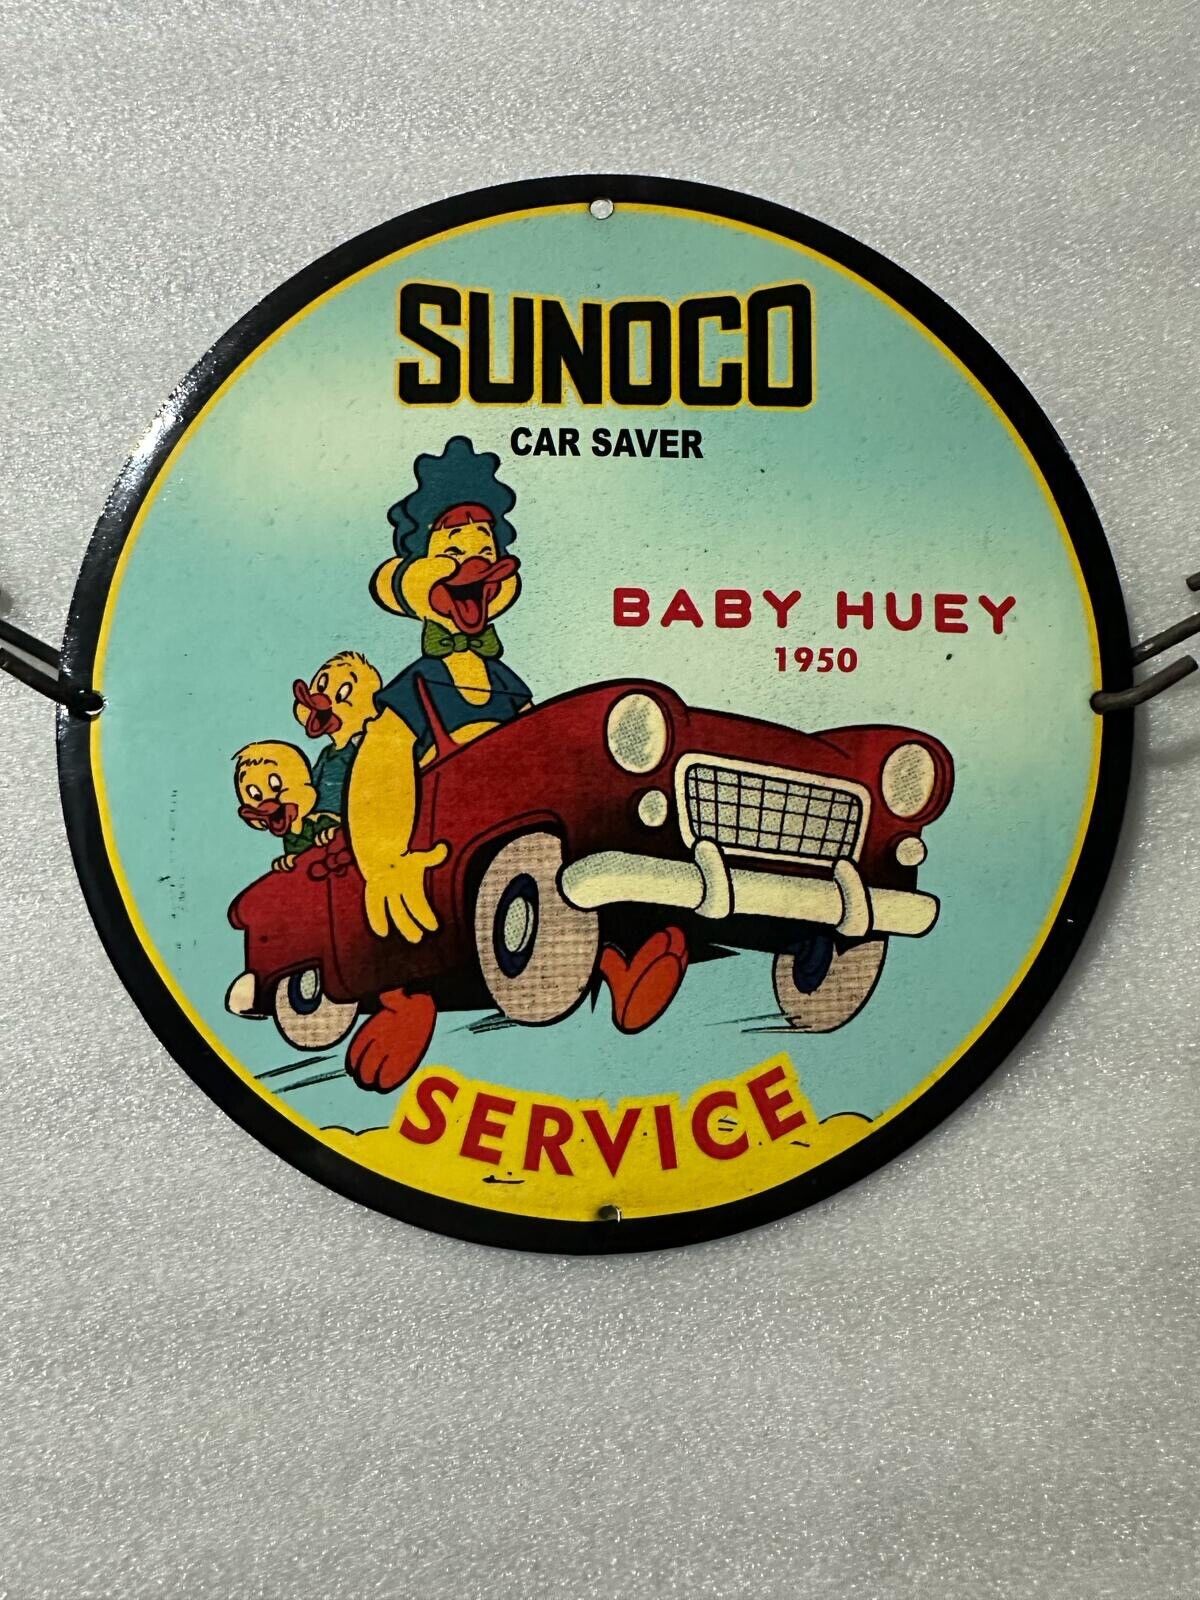 SUNOCO SERVICE BABY HUEY PORCELAIN ENAMEL GAS MOTOR OIL REPAIR PUMP PLATE SIGN